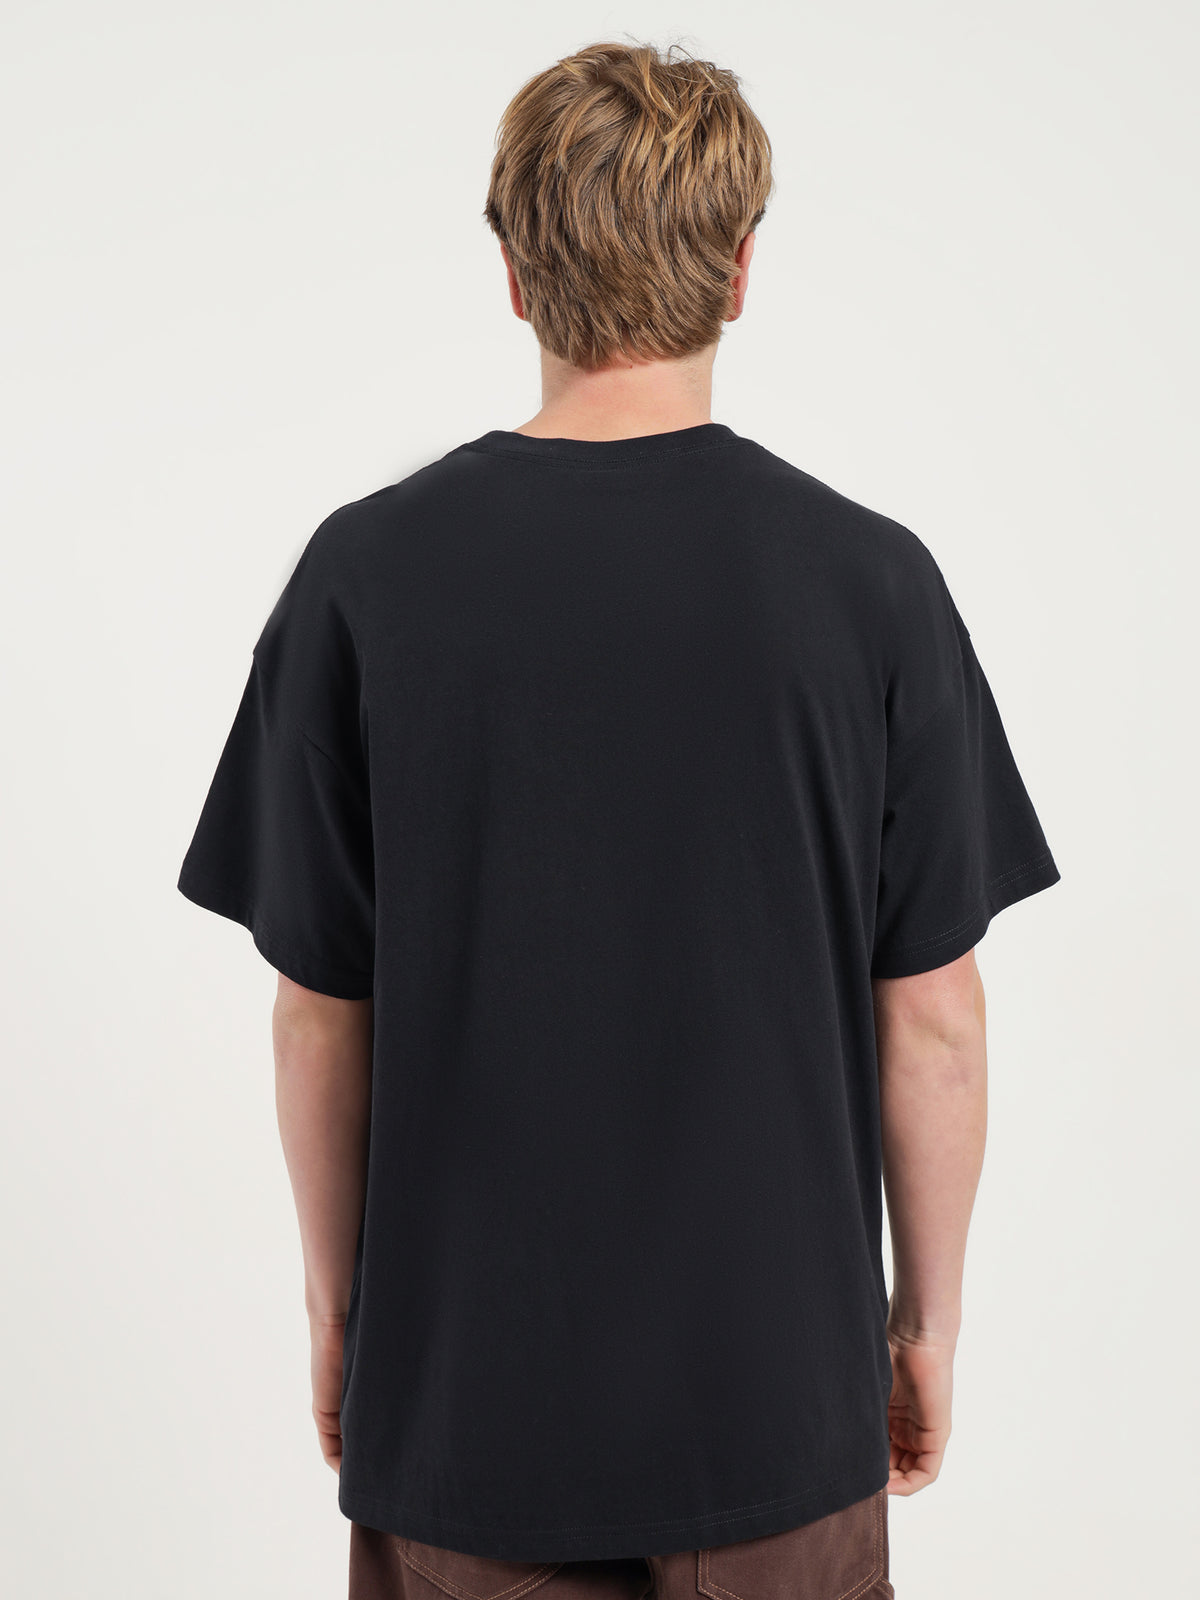 Fireball T-Shirt in Faded Black